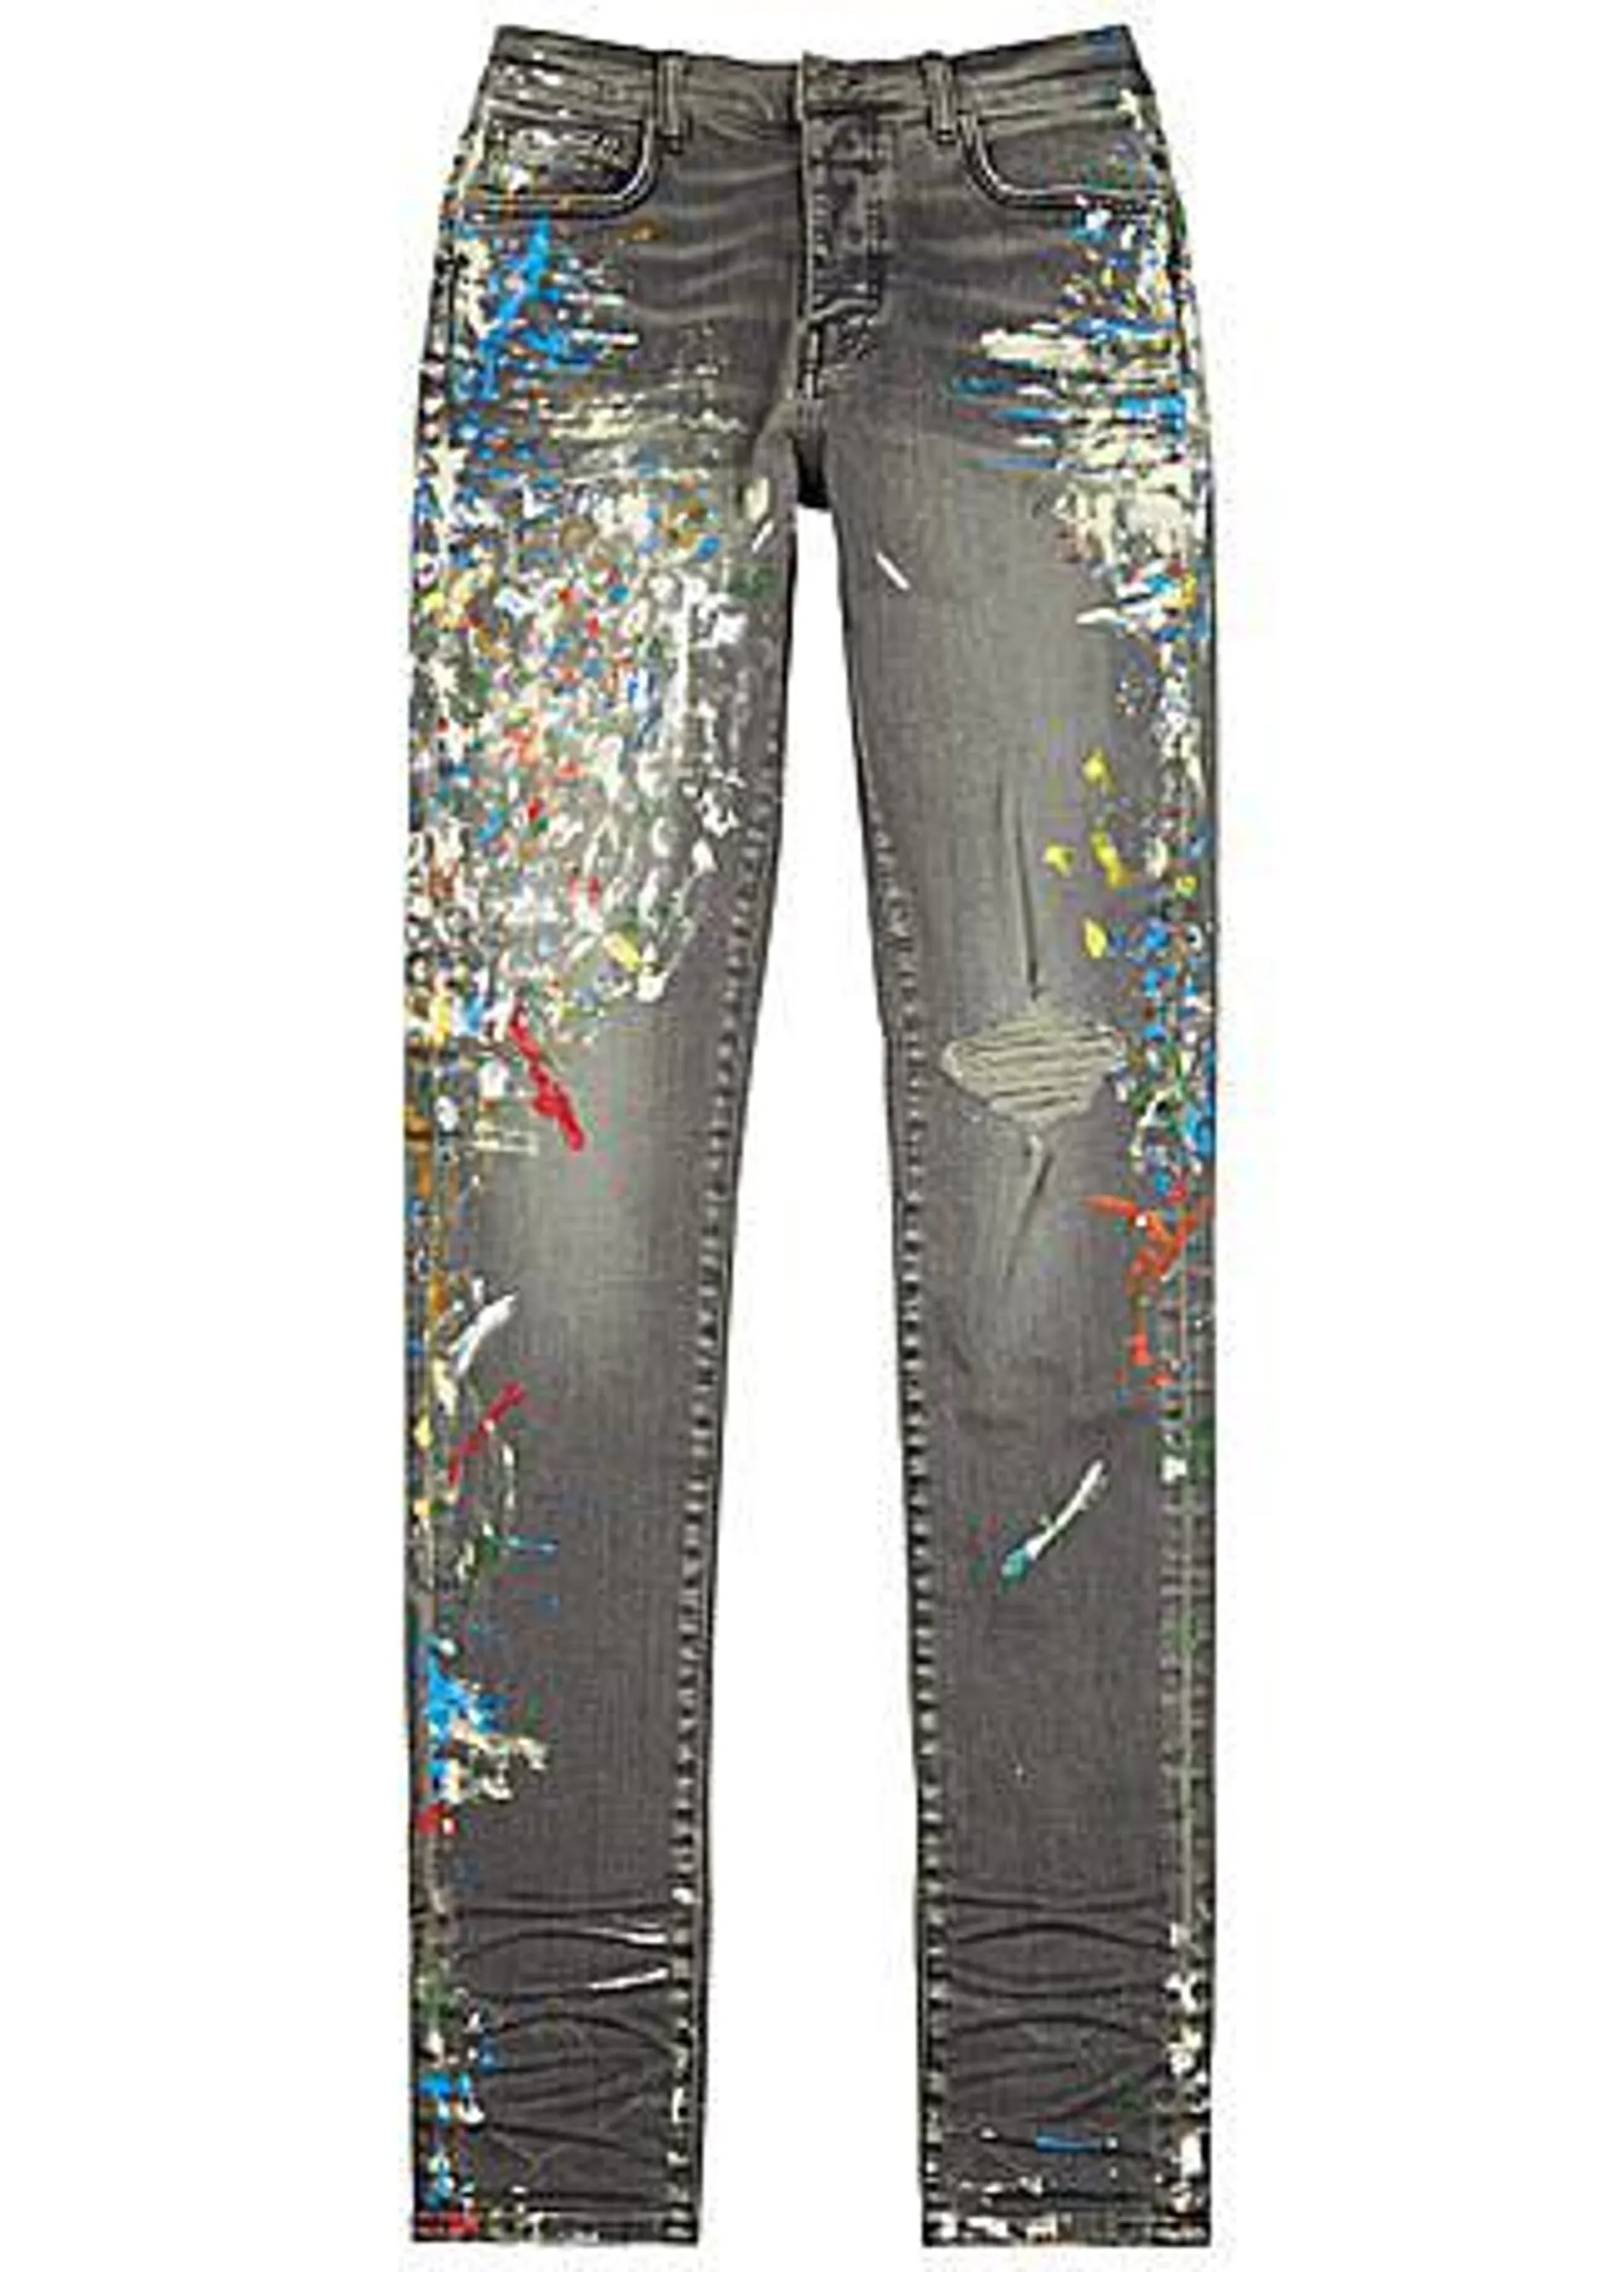 Painter distressed skinny jeans